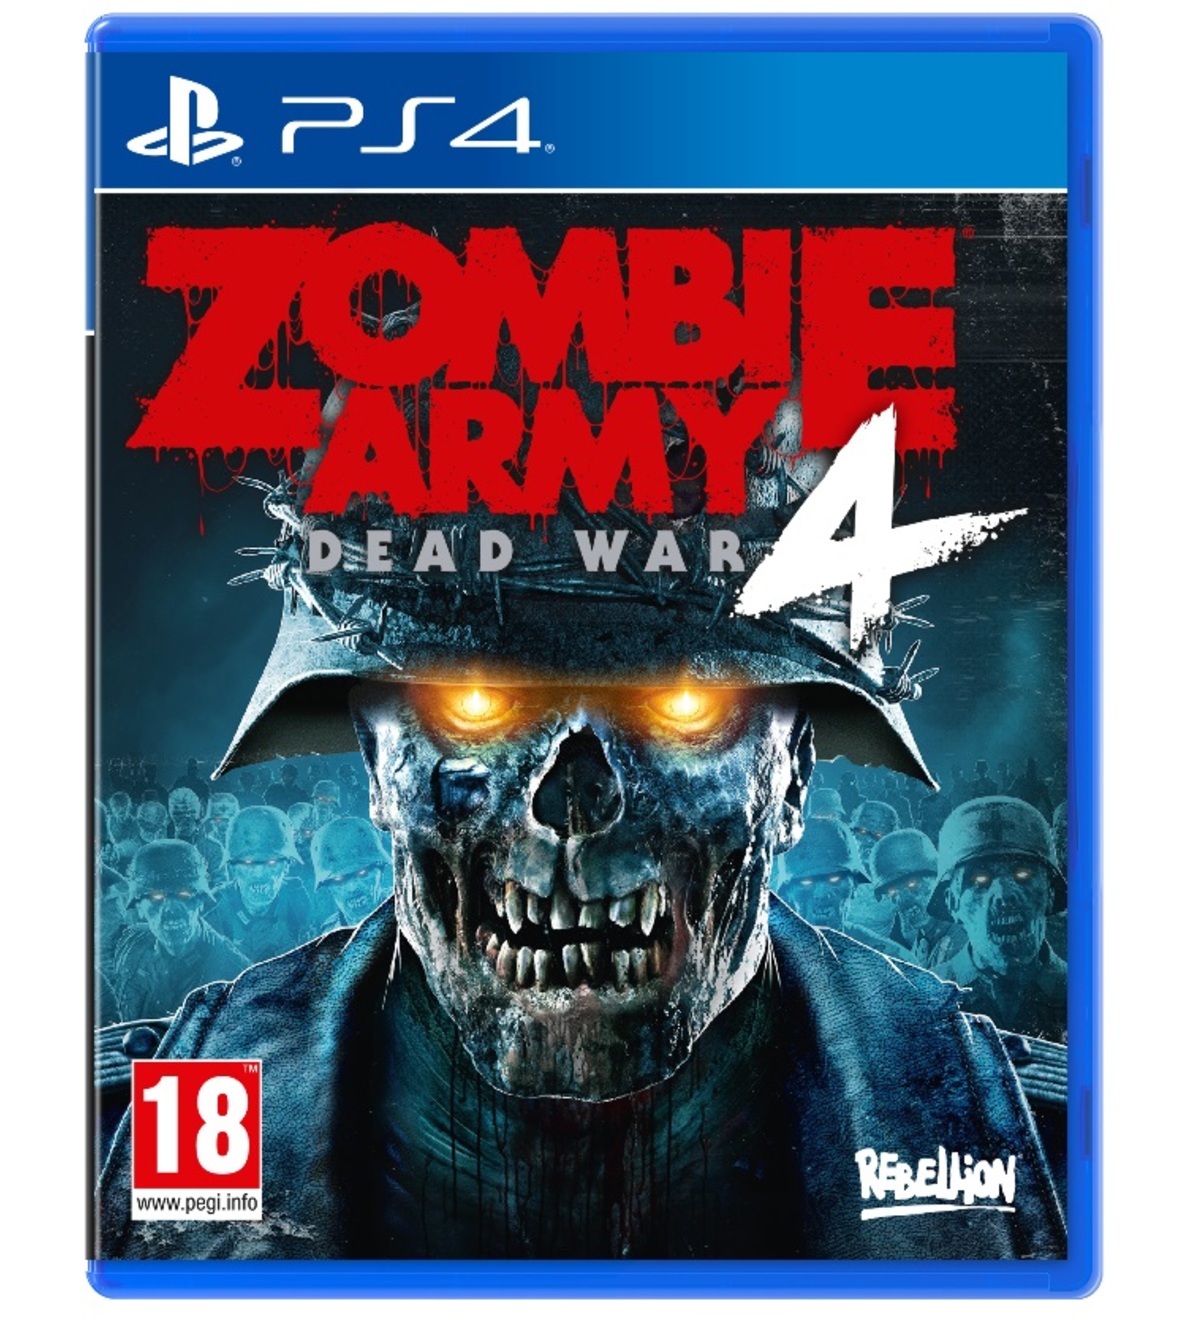 Zombie Army 4 Dead War [PS4, русские субтитры]